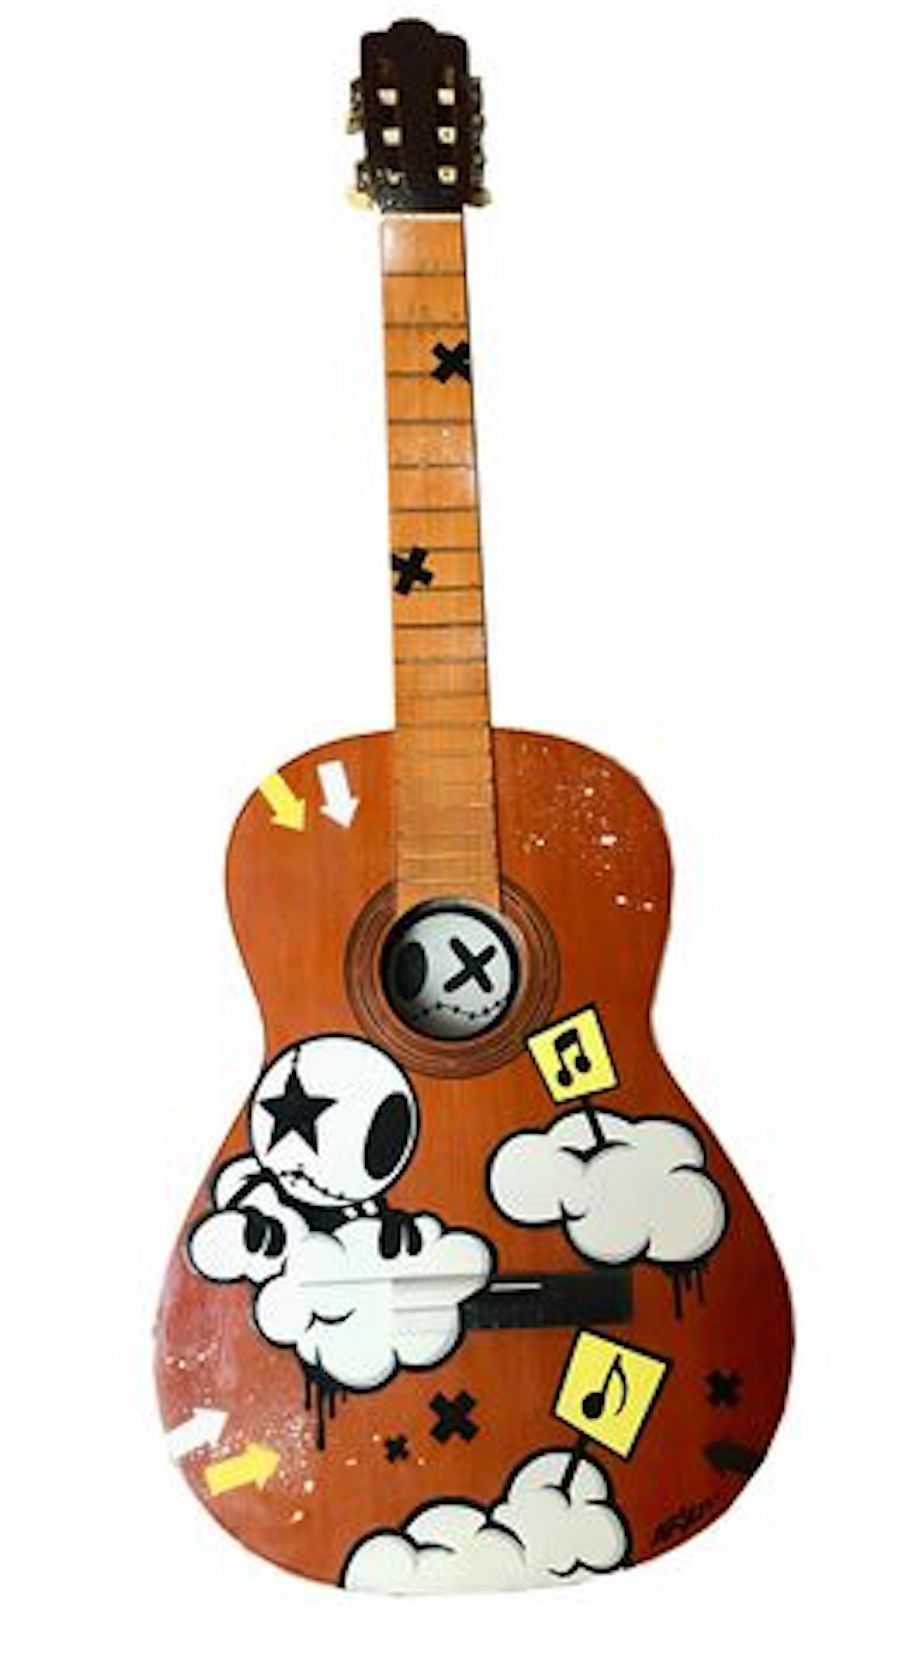 Arsen ǞǞǞ

 穆西科

 吉他的技术

 

 以完美状态出售的独特作品

 尺寸：100 x 36 x 10厘米



拍品将由我们的承运人负责，他&hellip;